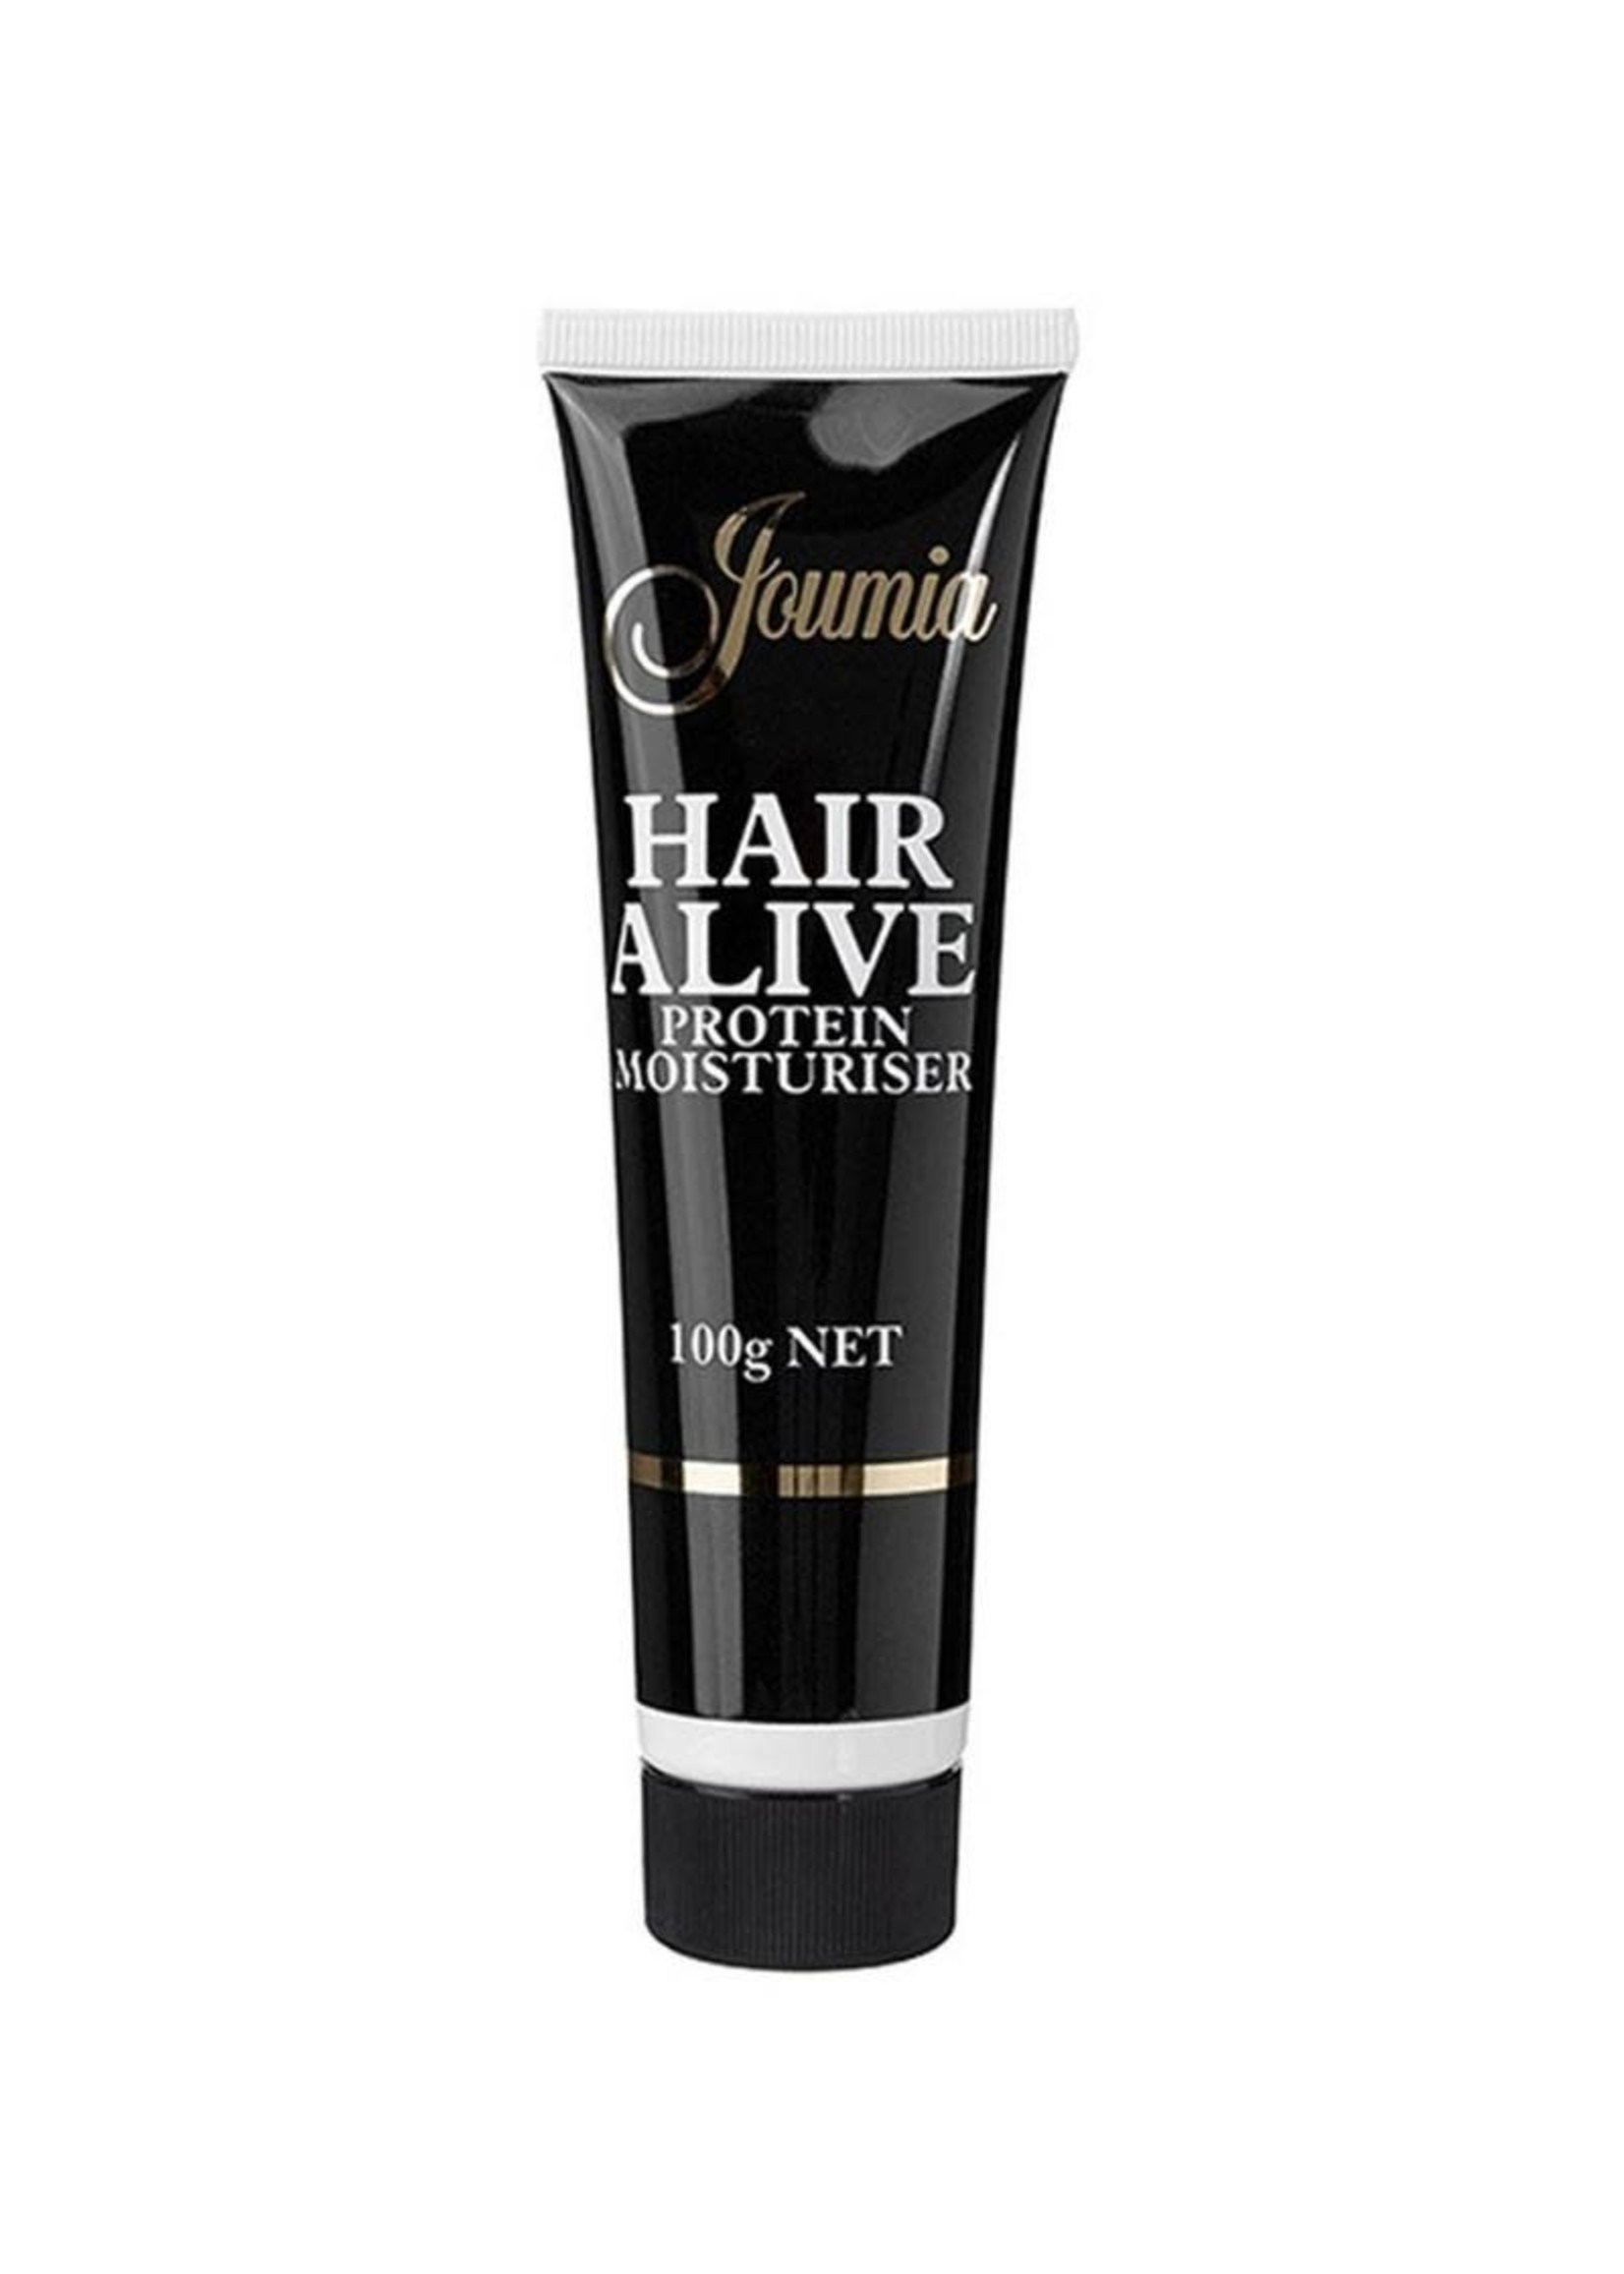 Joumia Hair Alive Moisturiser 100g